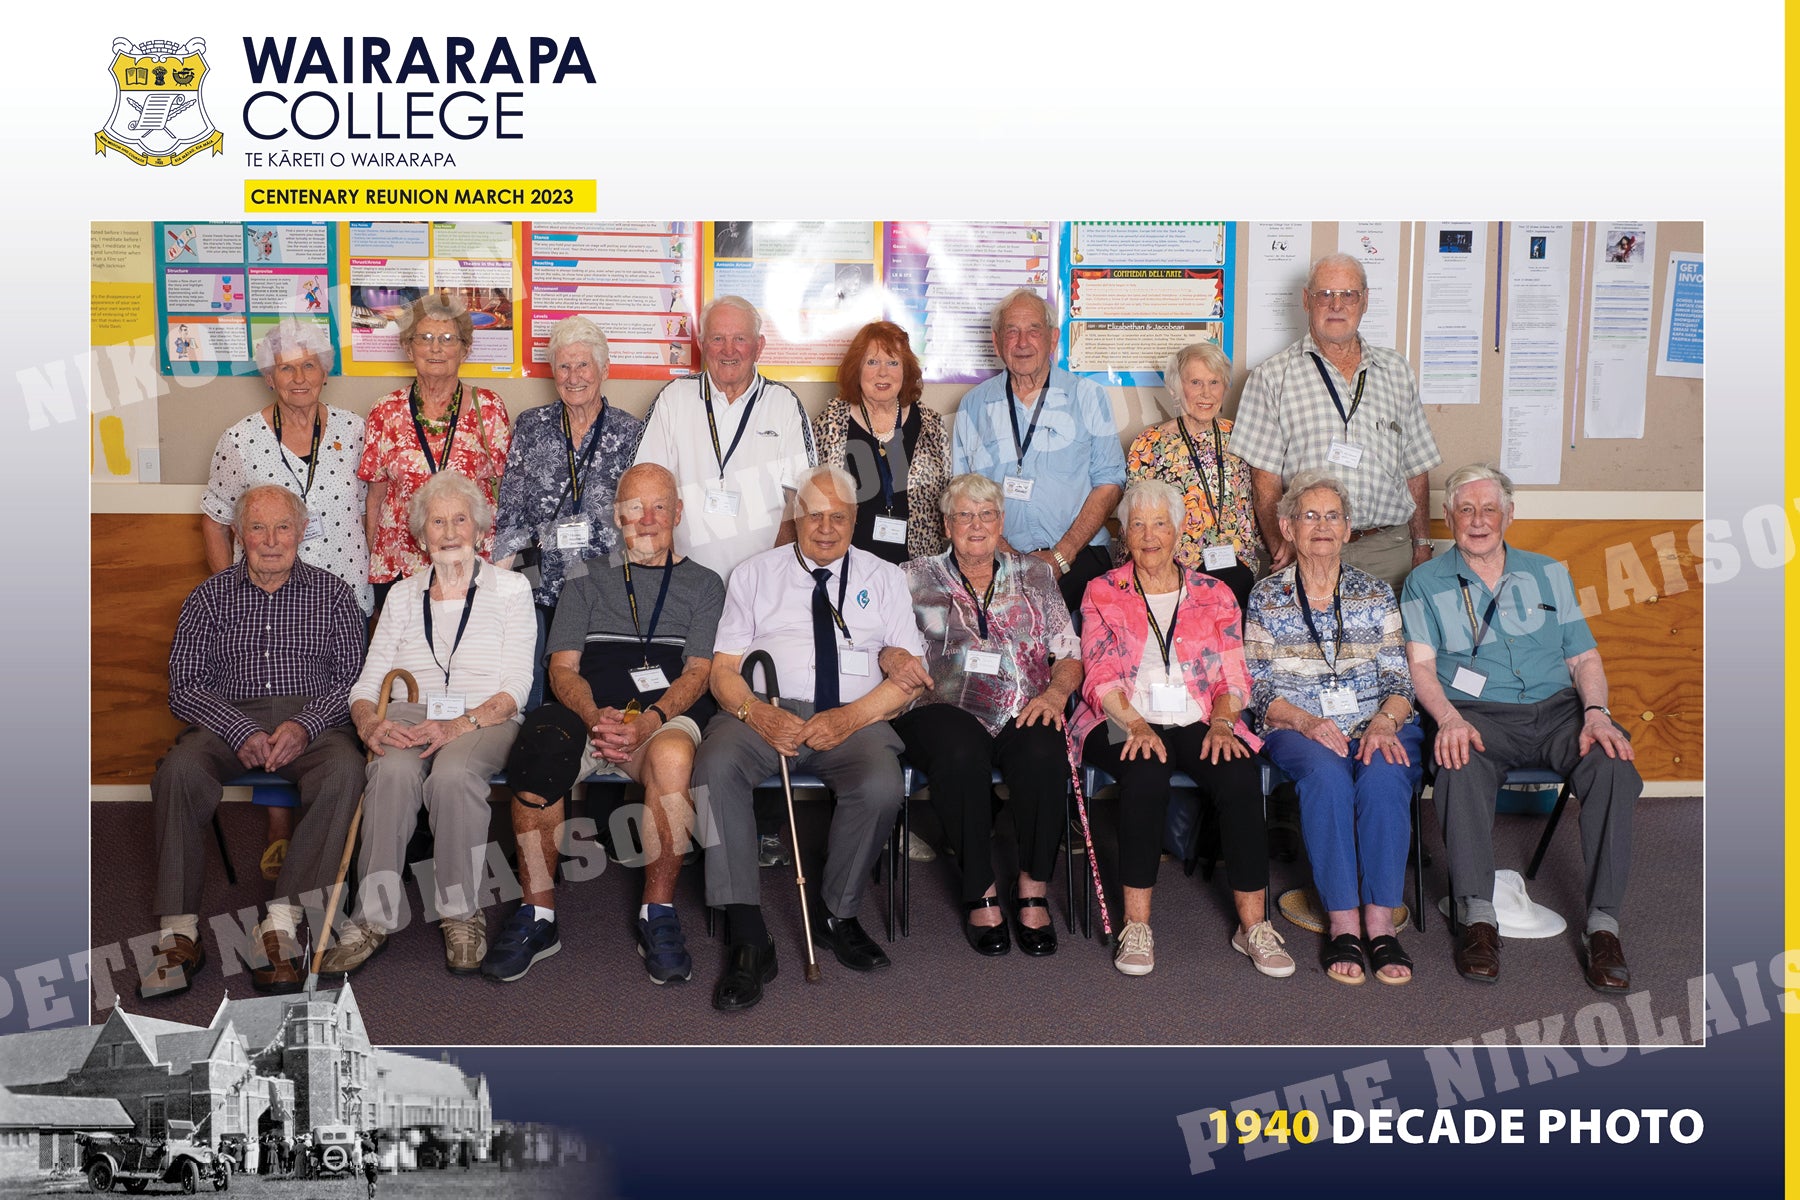 1940 Decade Photo - Wairarapa College Centenary